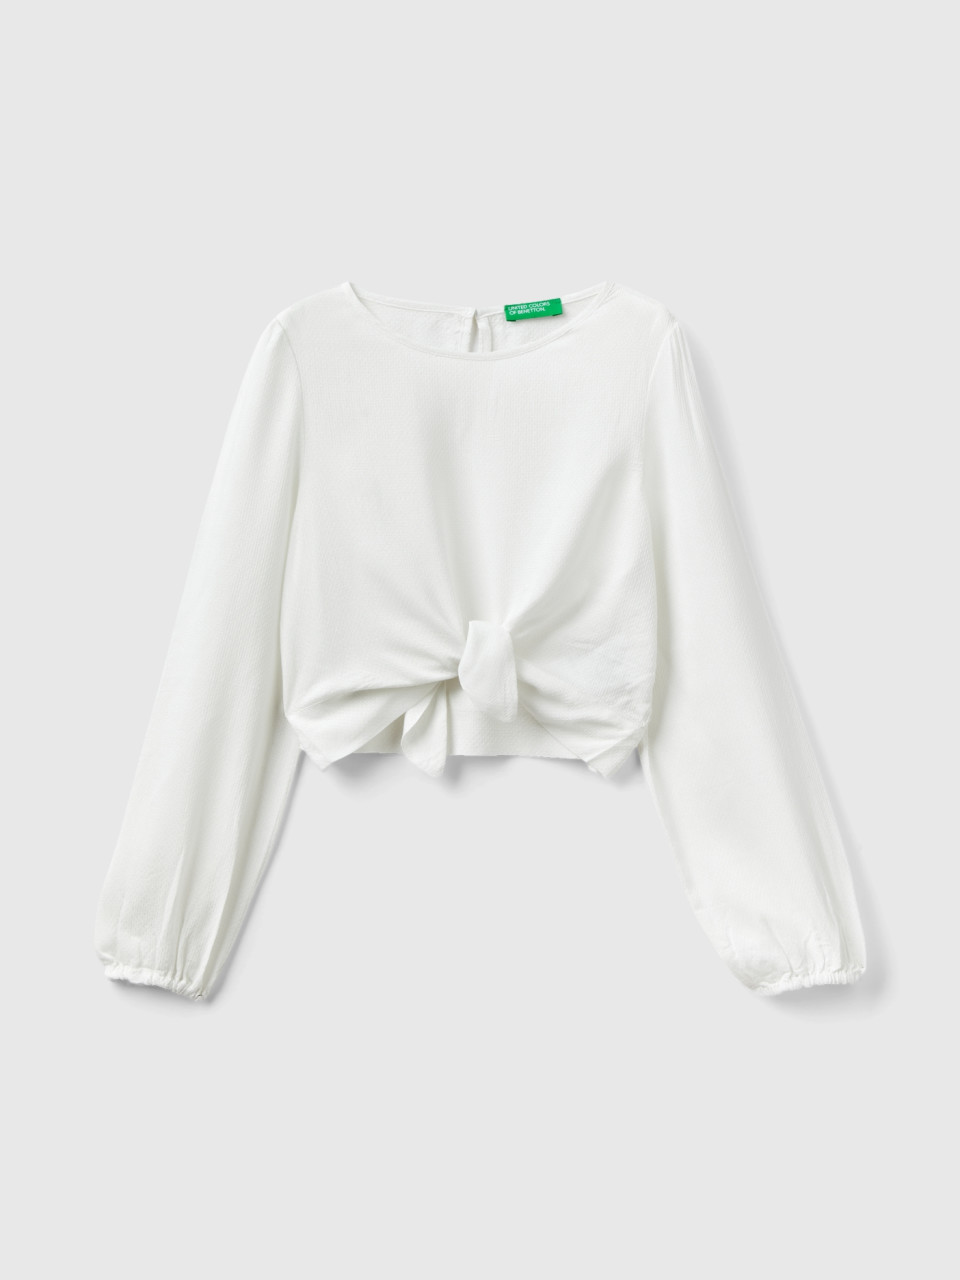 Benetton, Cropped-bluse Mit Knoten, Cremeweiss, female